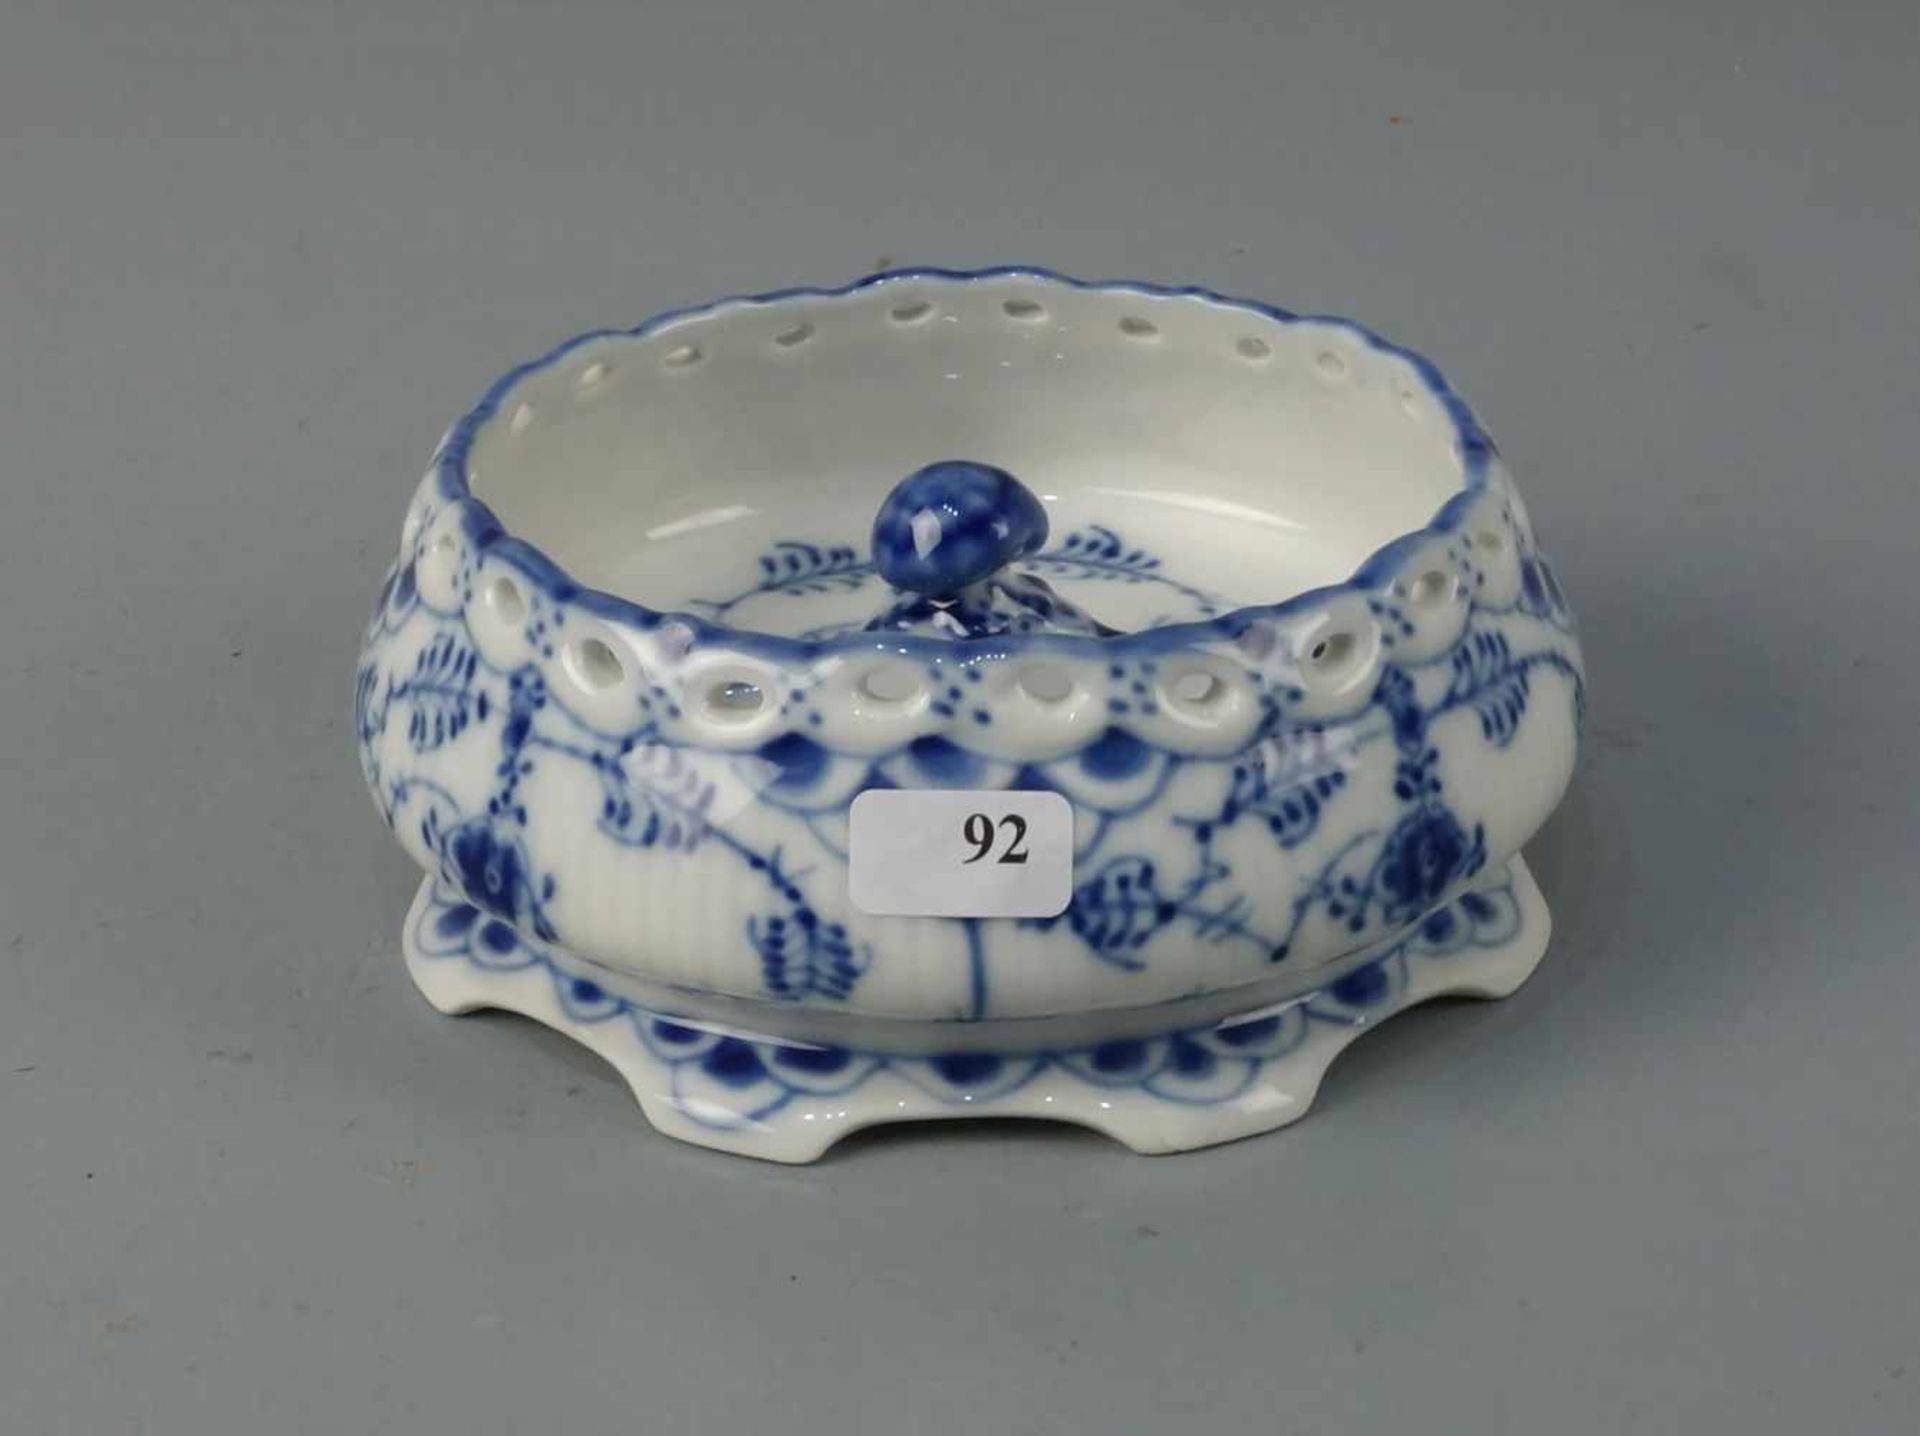 SCHALE / CABARET / RINGSCHALE / bowl, "MUSSELMALET VOLLSPITZE", Porzellan, Manufaktur Royal